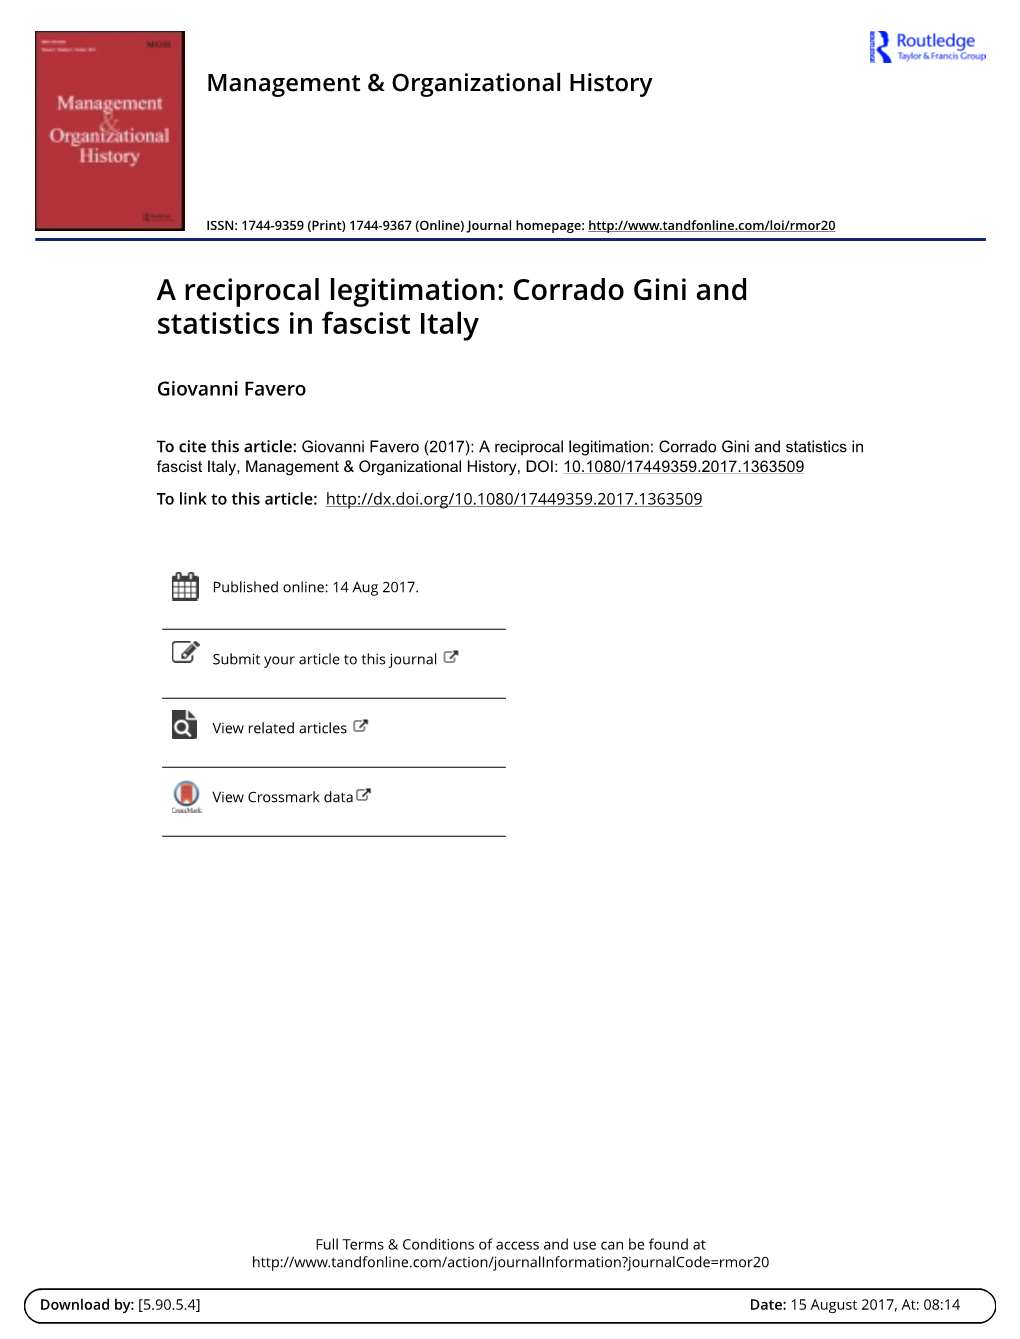 A Reciprocal Legitimation: Corrado Gini and Statistics in Fascist Italy